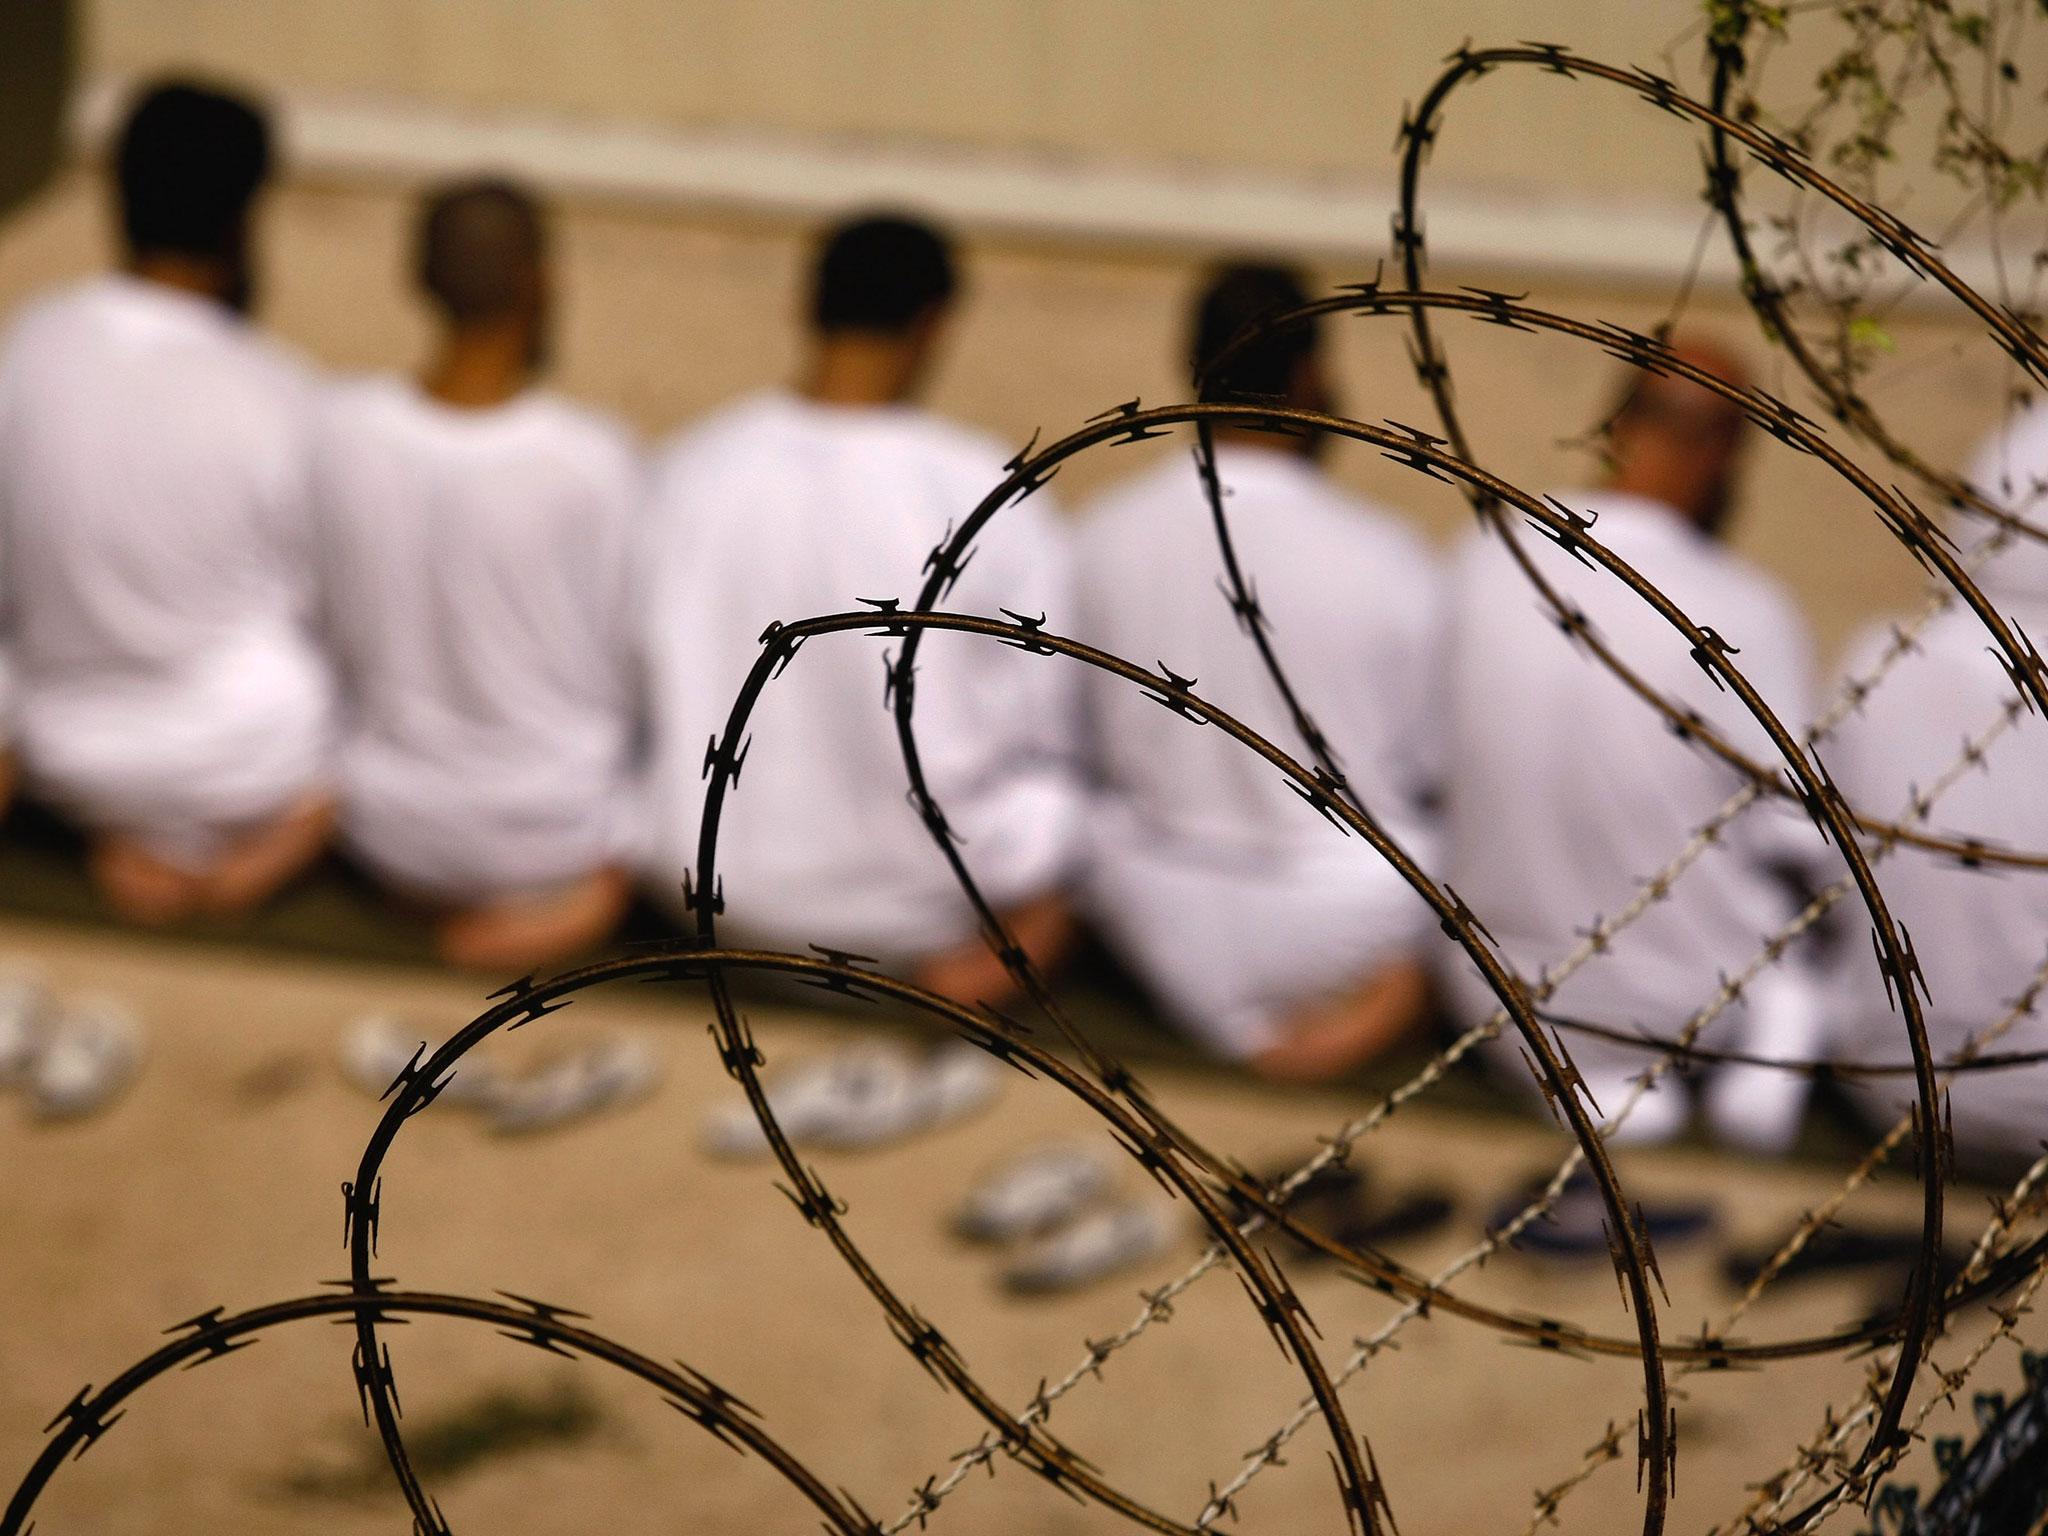 Saudi Arabia's terrorist rehab actually 'secret radicalisation programme,' Guantanamo prisoner claims - The Independent